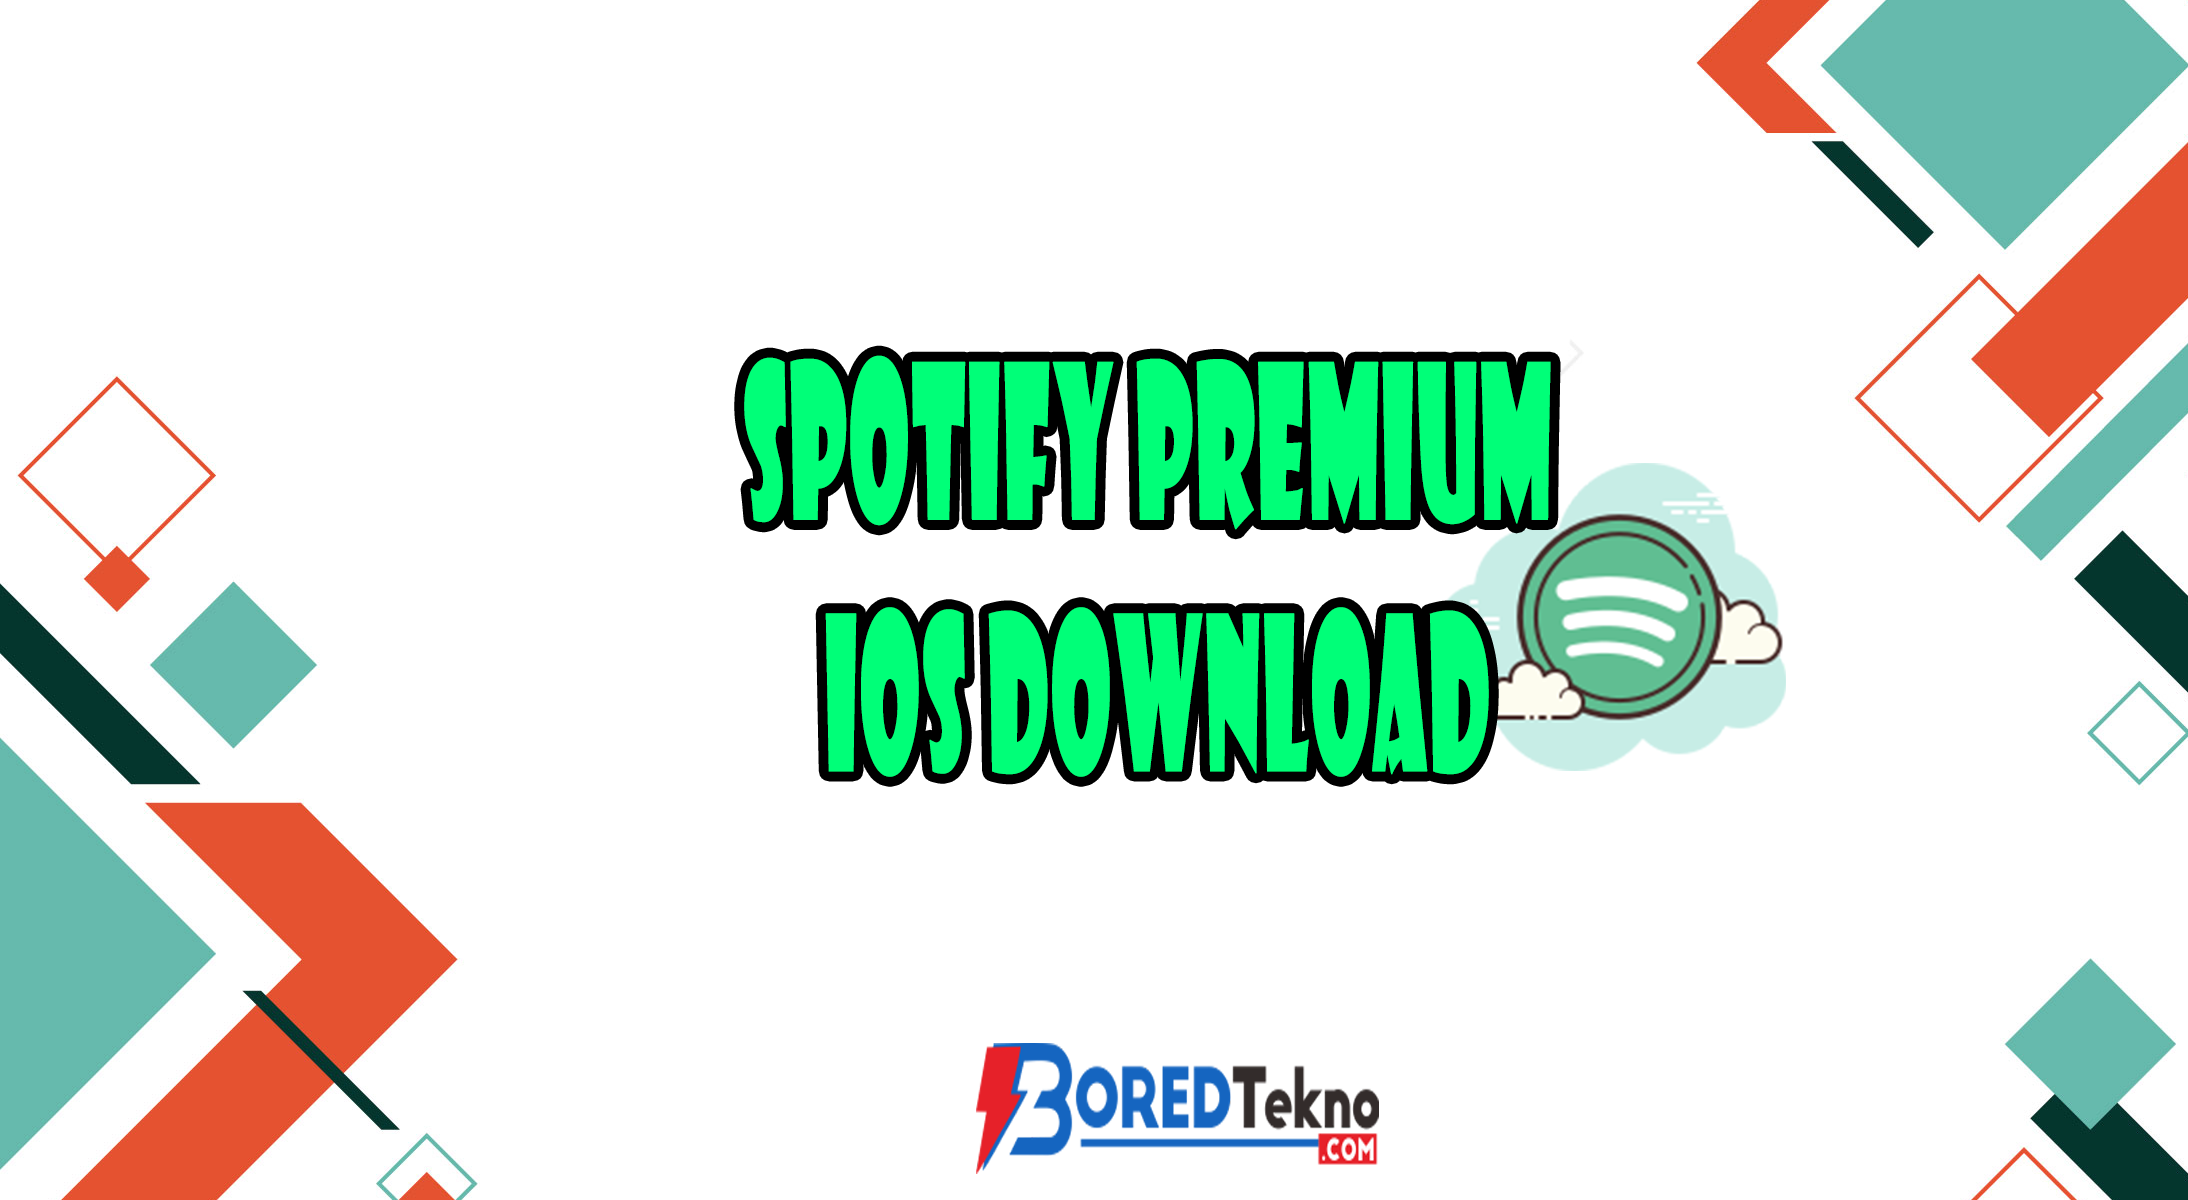 Spotify Premium IOS Download